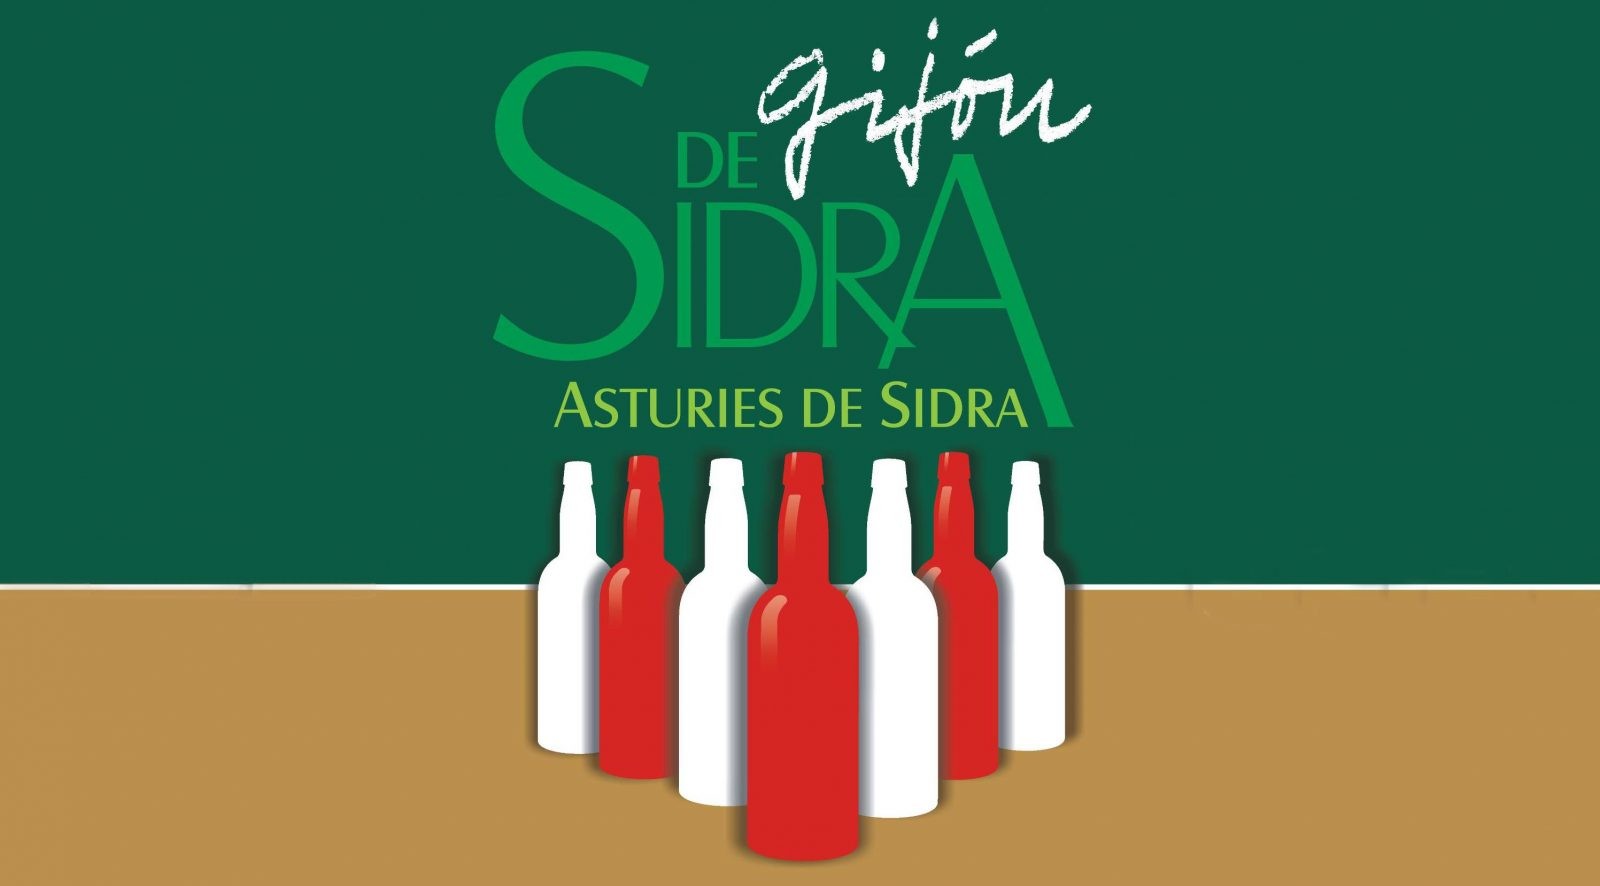 Gijón de Sidra